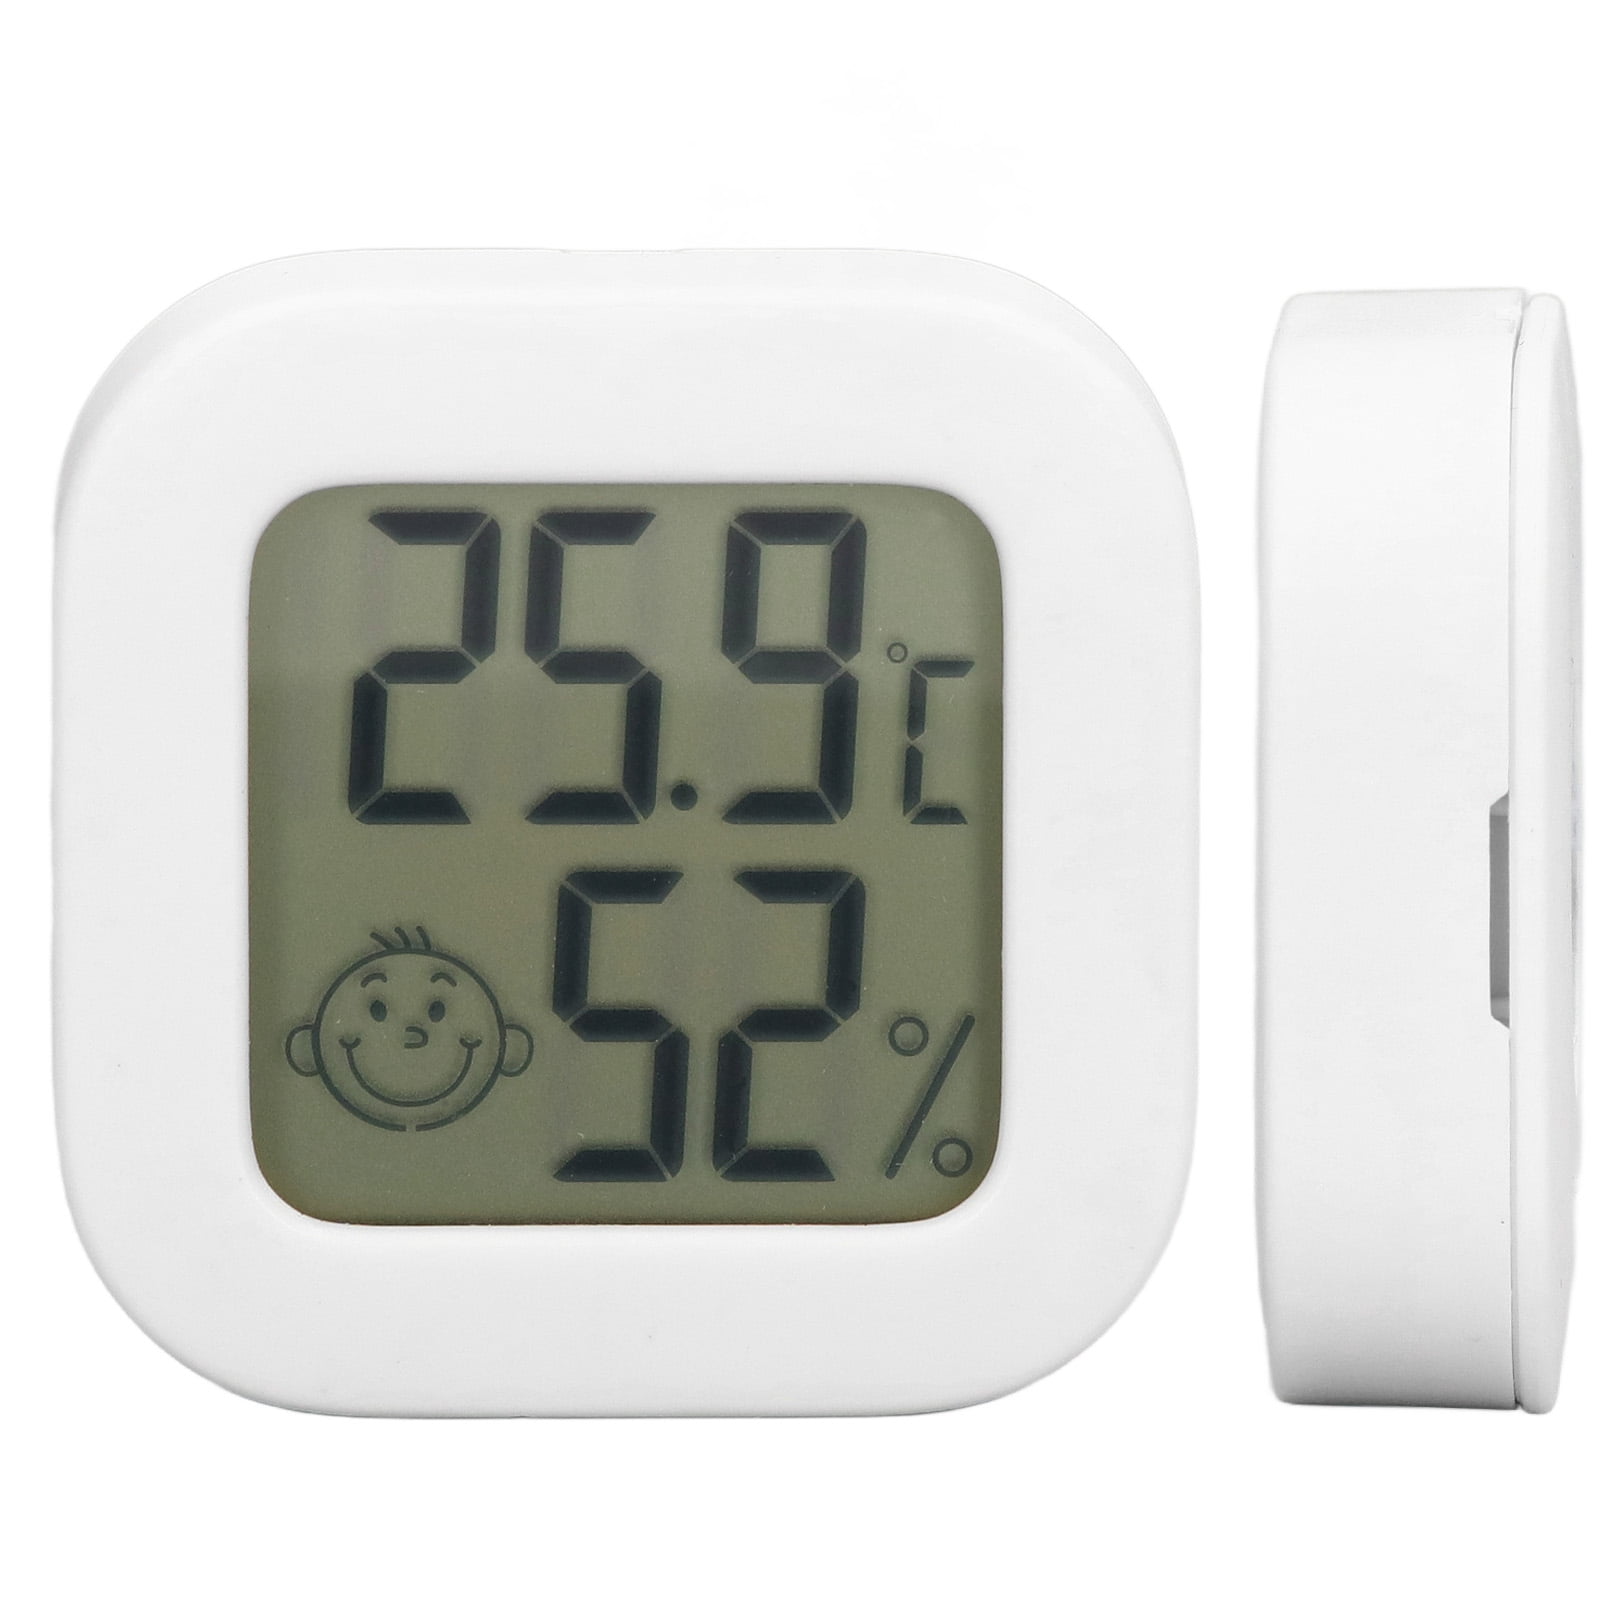 Temperature Gauge Temperature Meter Home Thermometer Humidity